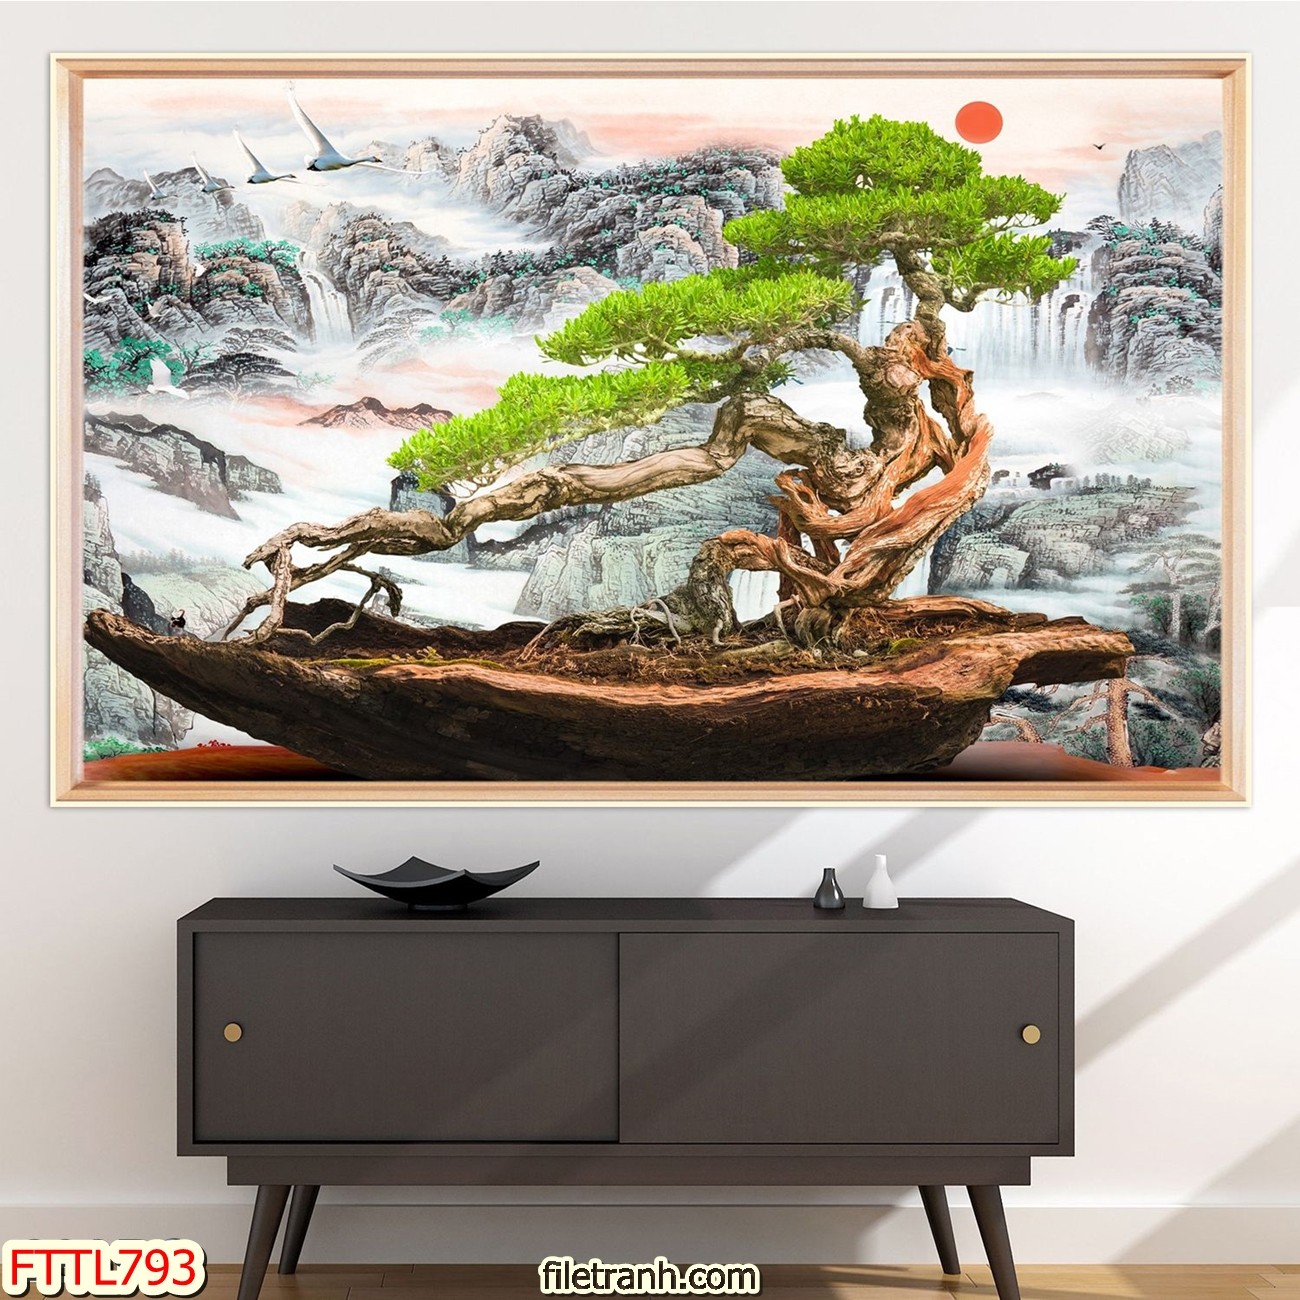 https://filetranh.com/file-tranh-chau-mai-bonsai/file-tranh-chau-mai-bonsai-fttl793.html